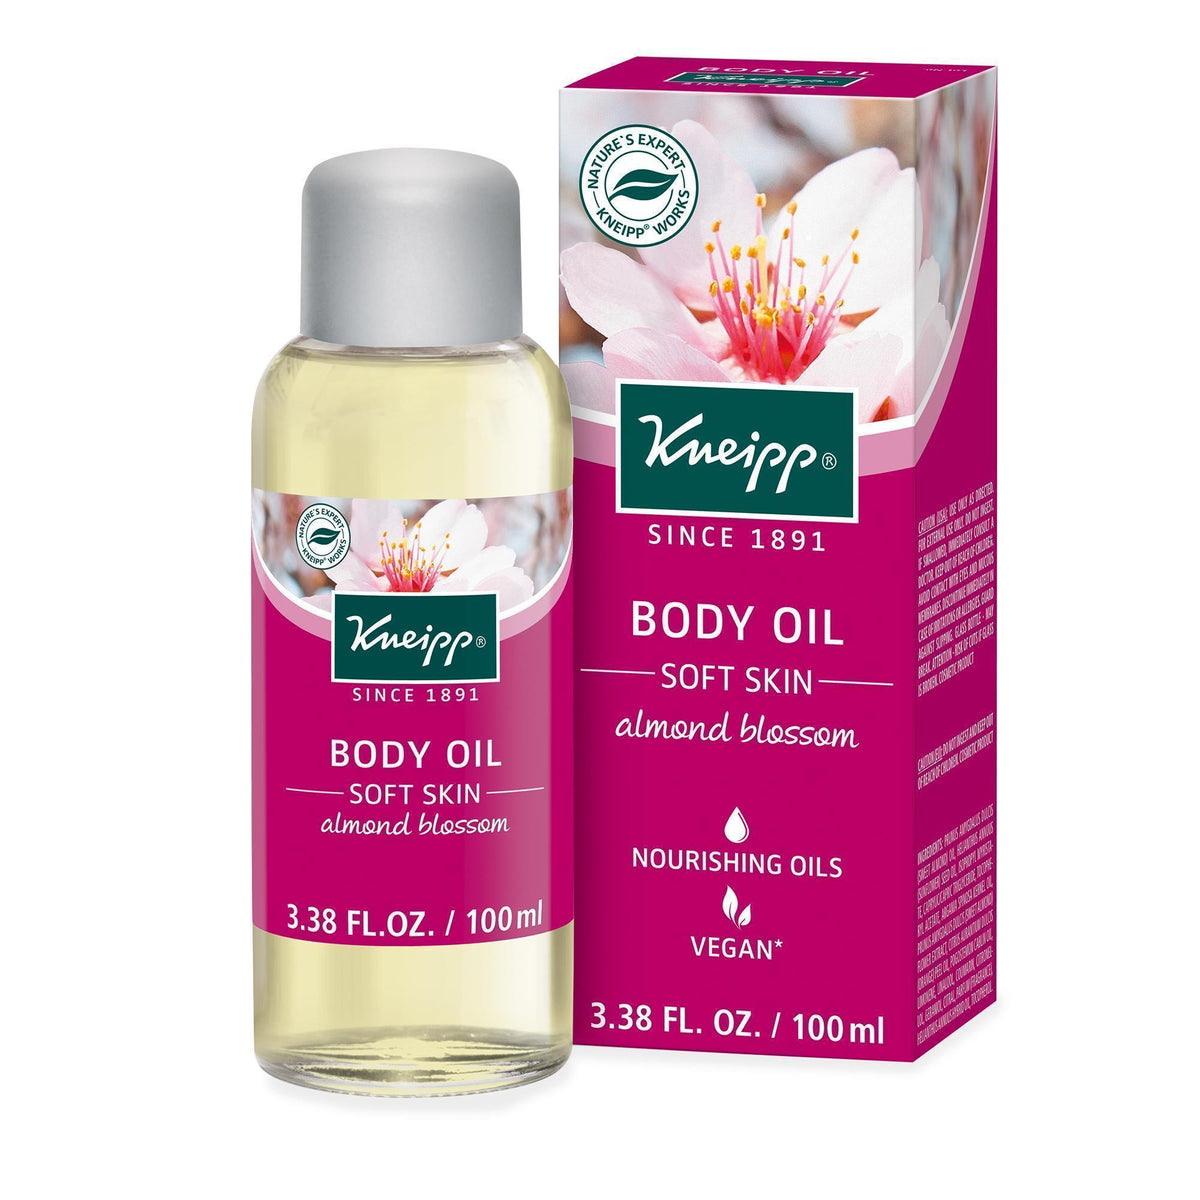 Kneipp Soft Skin Body Oil